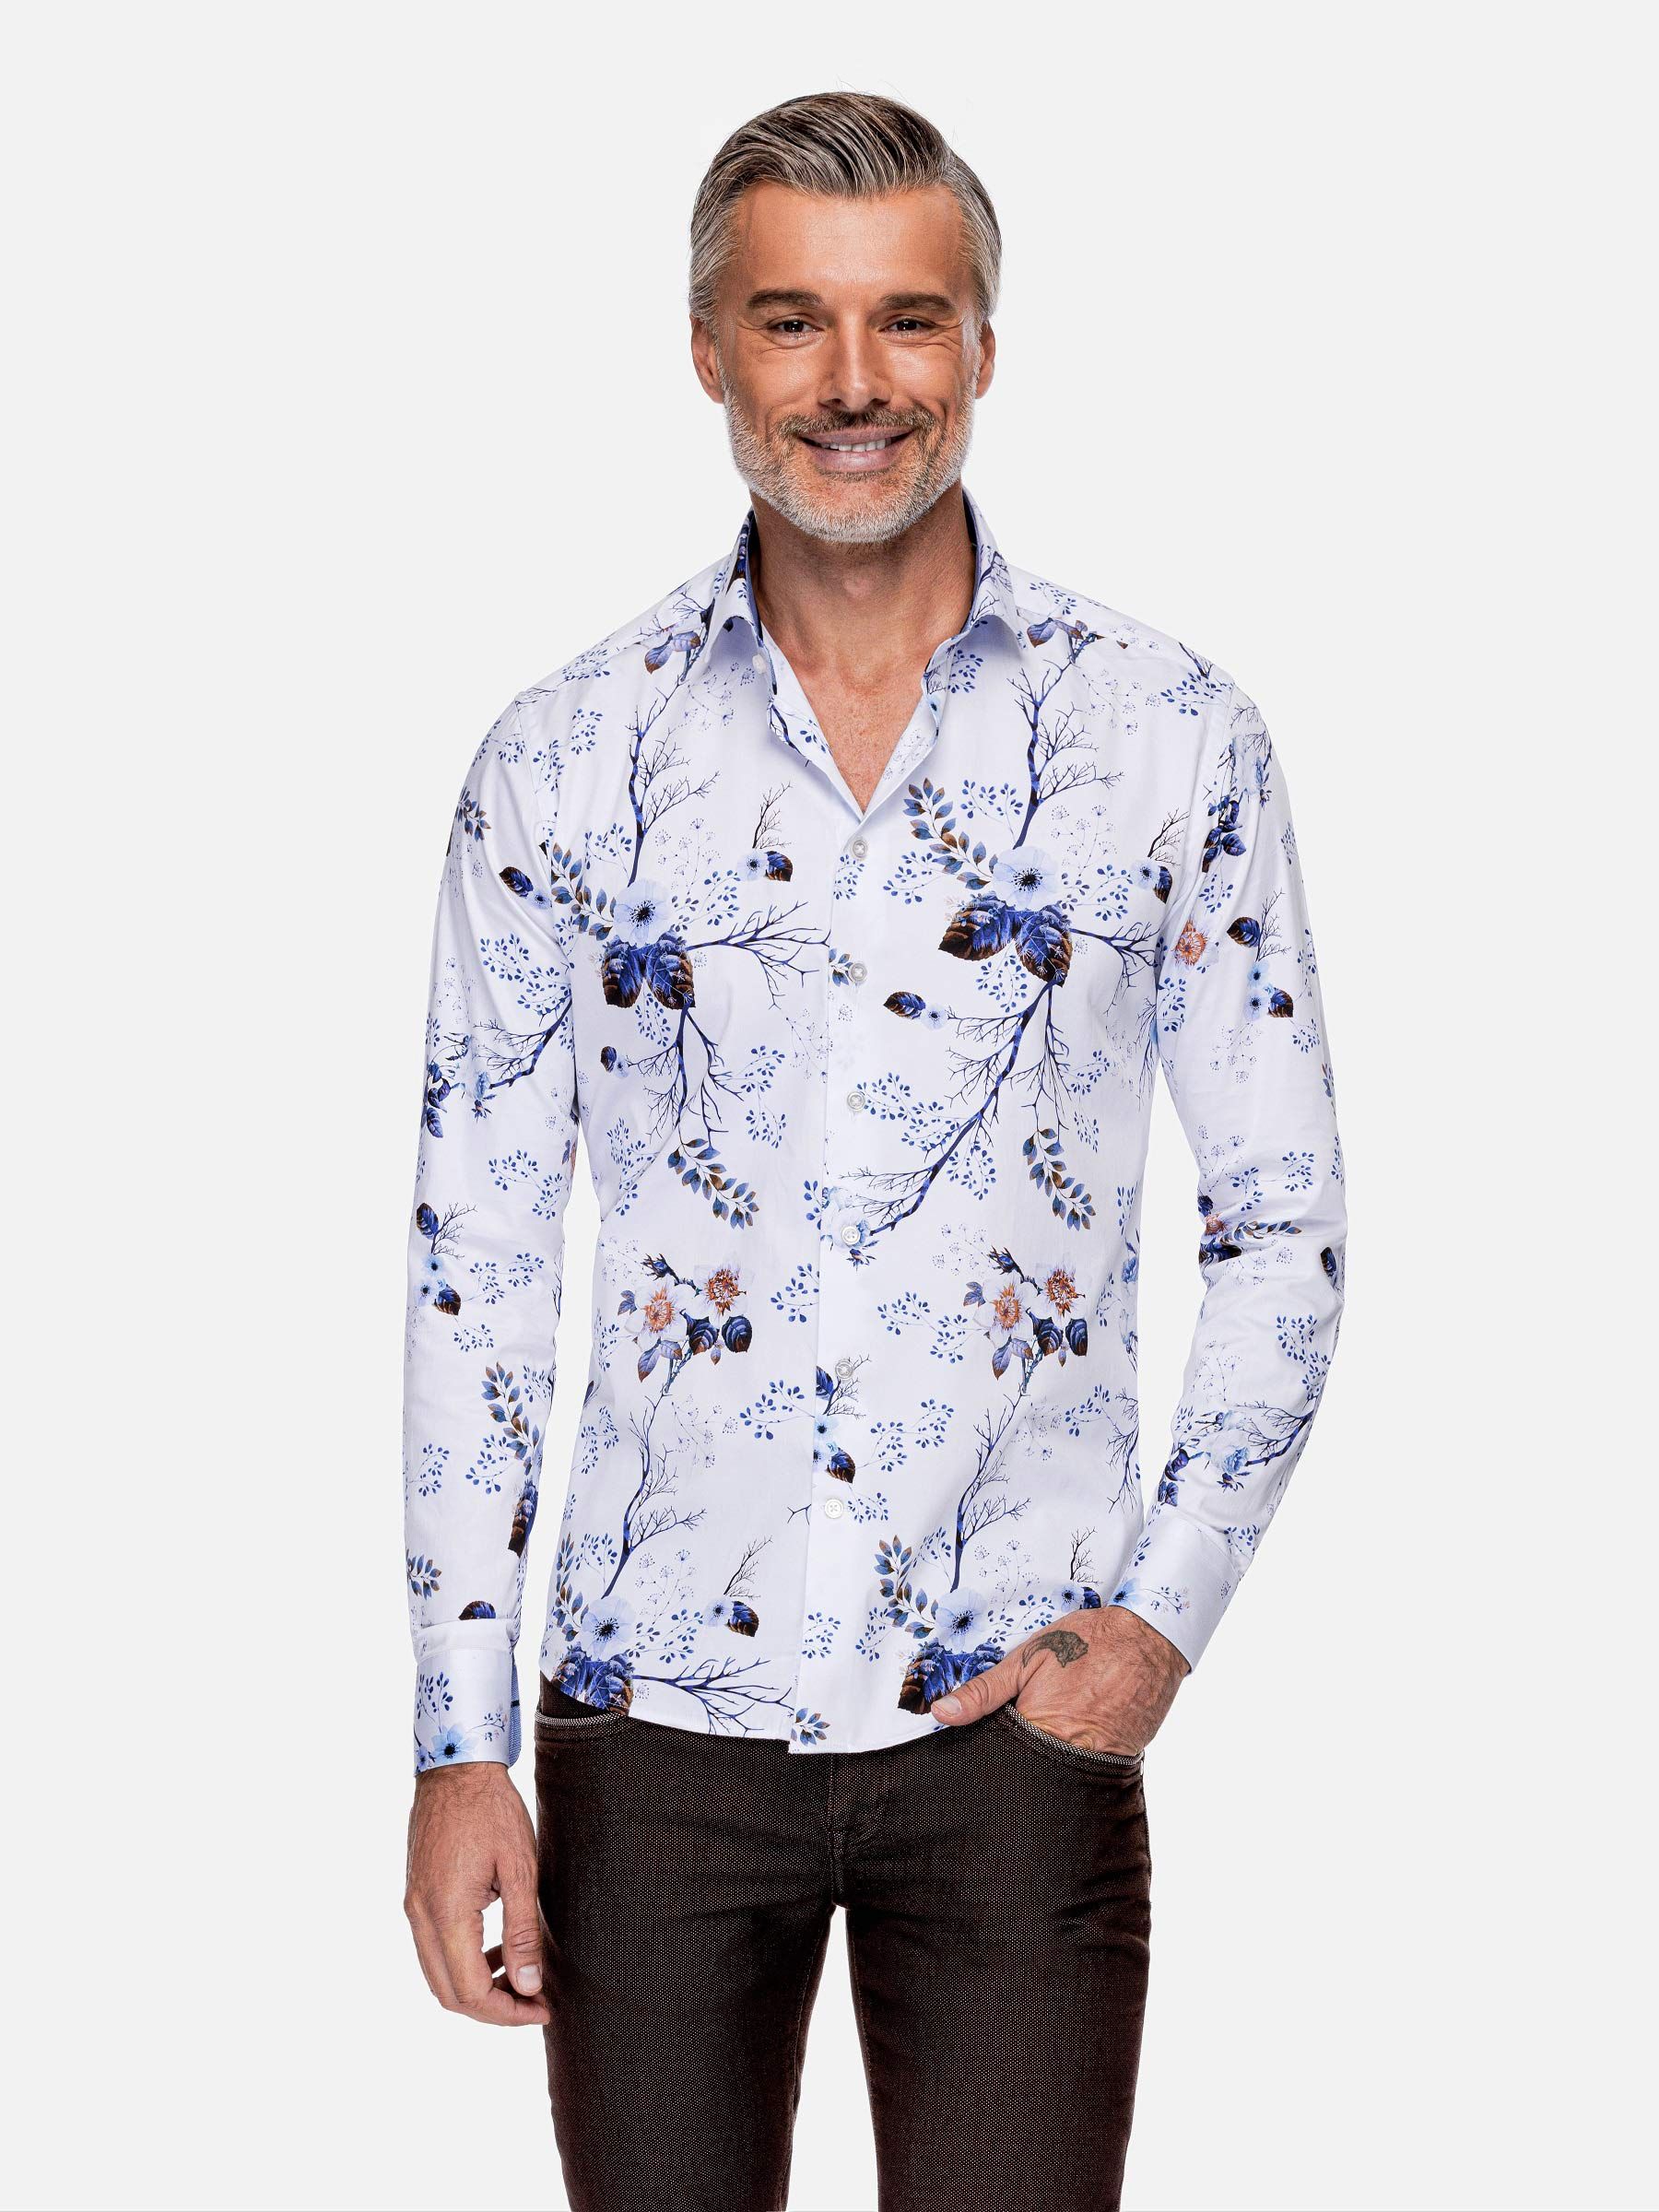 mens floral dress shirts